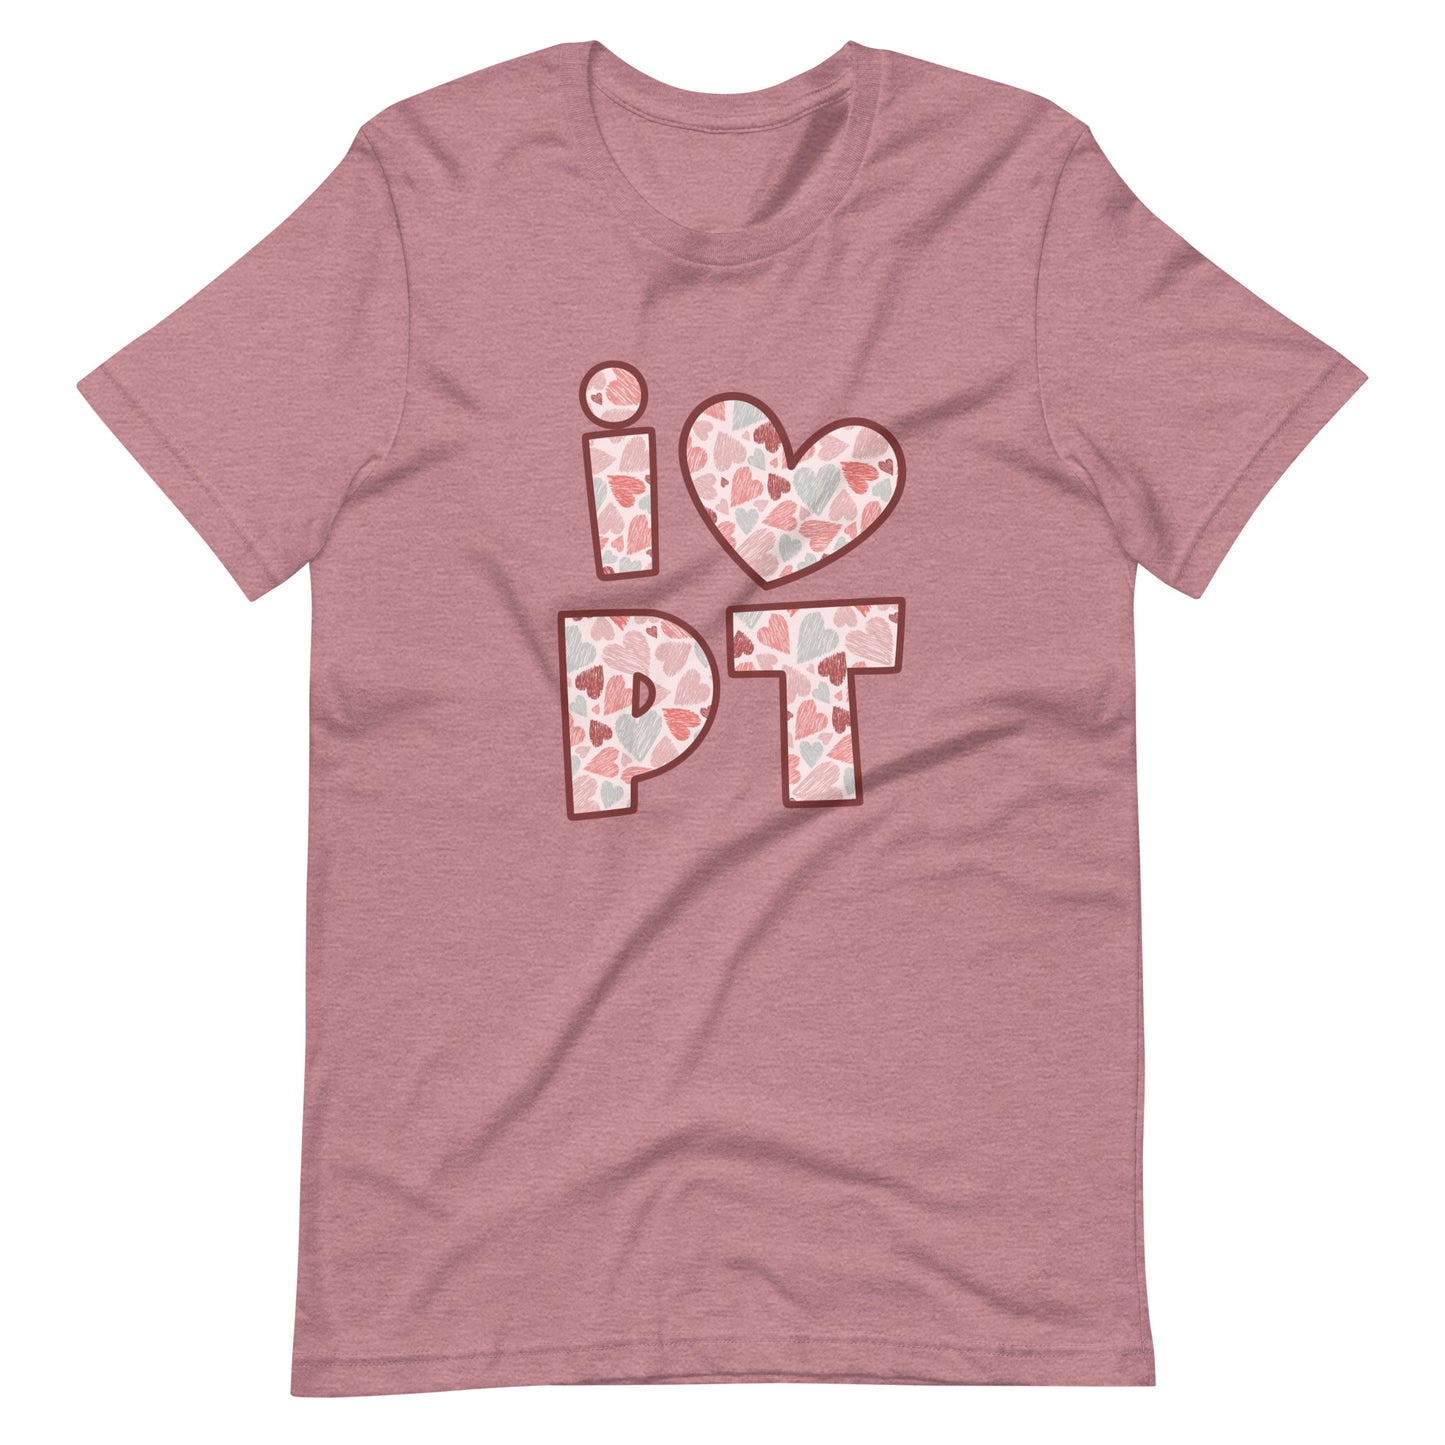 I Love PT | Hearts | Adult Tee